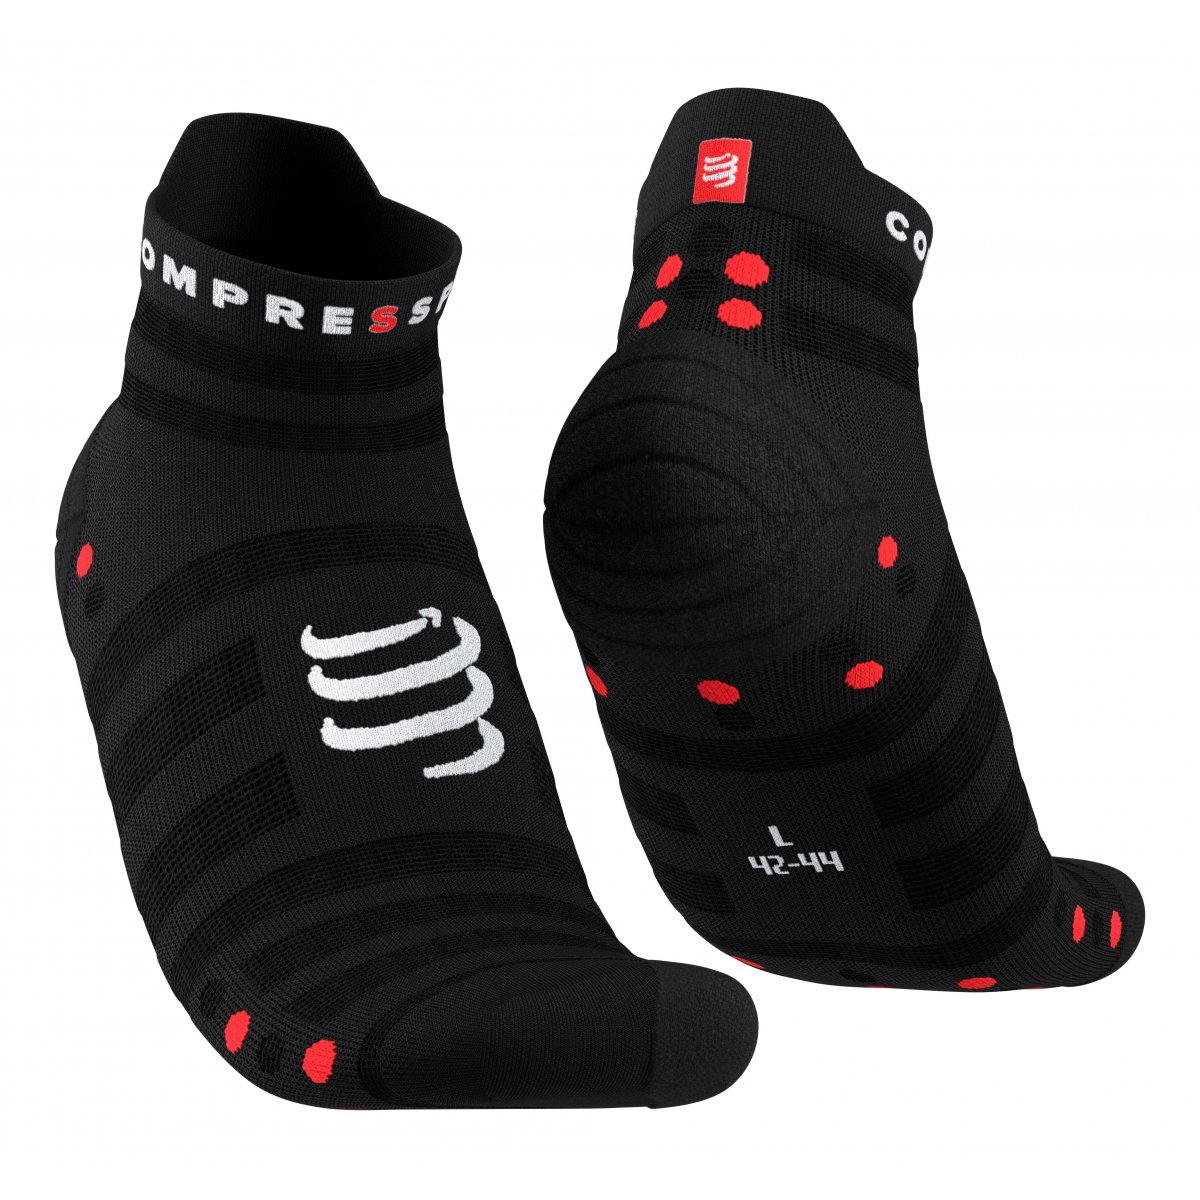 Pro Racing Socks v4.0 Ultralig